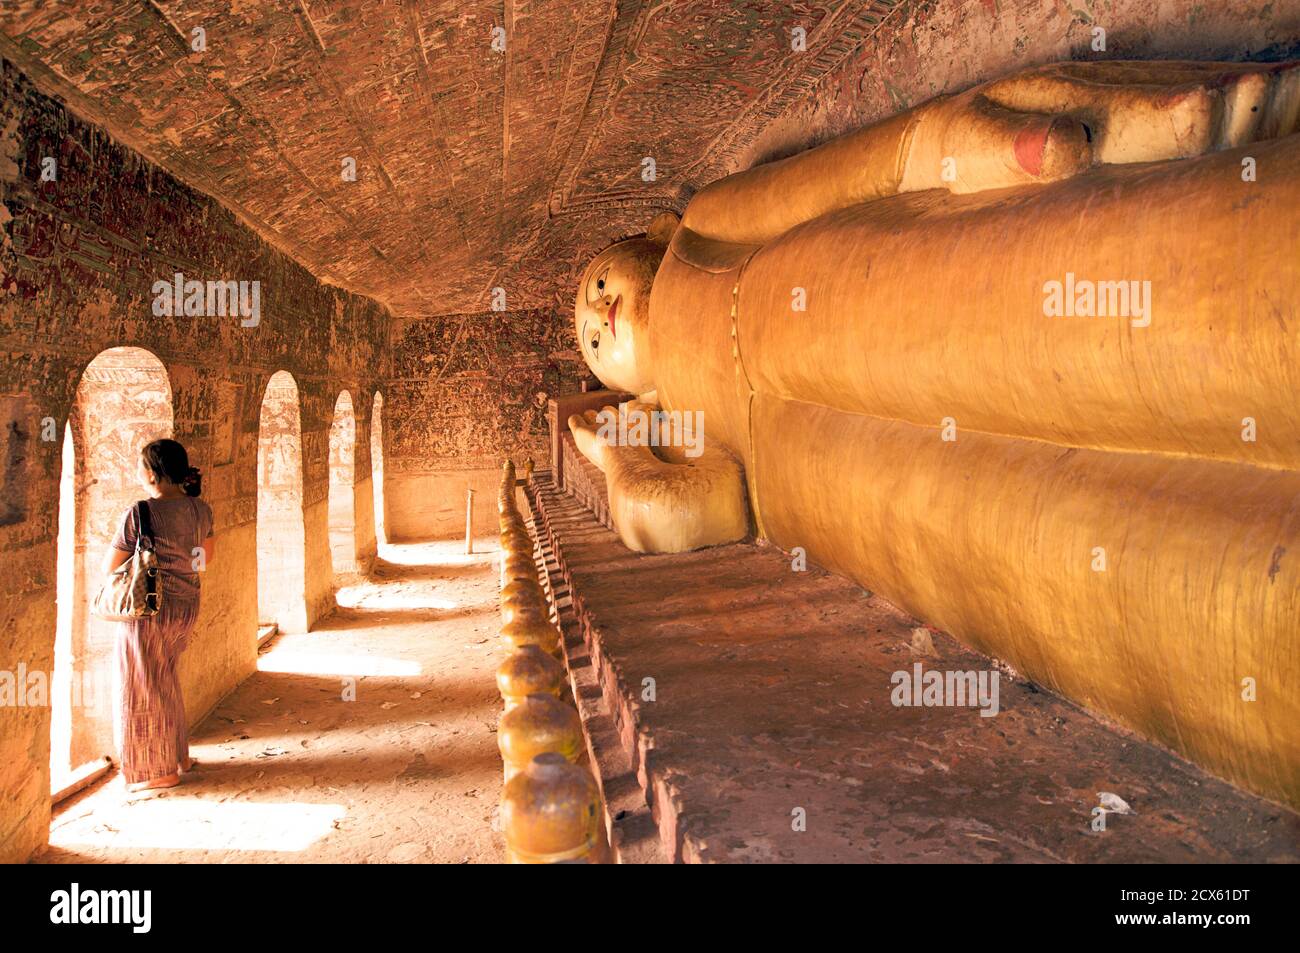 Reclining buddha, Hpo Win Daung caves, near Monywa, Sagaing region, Burma. MODEL RELEASED Stock Photo